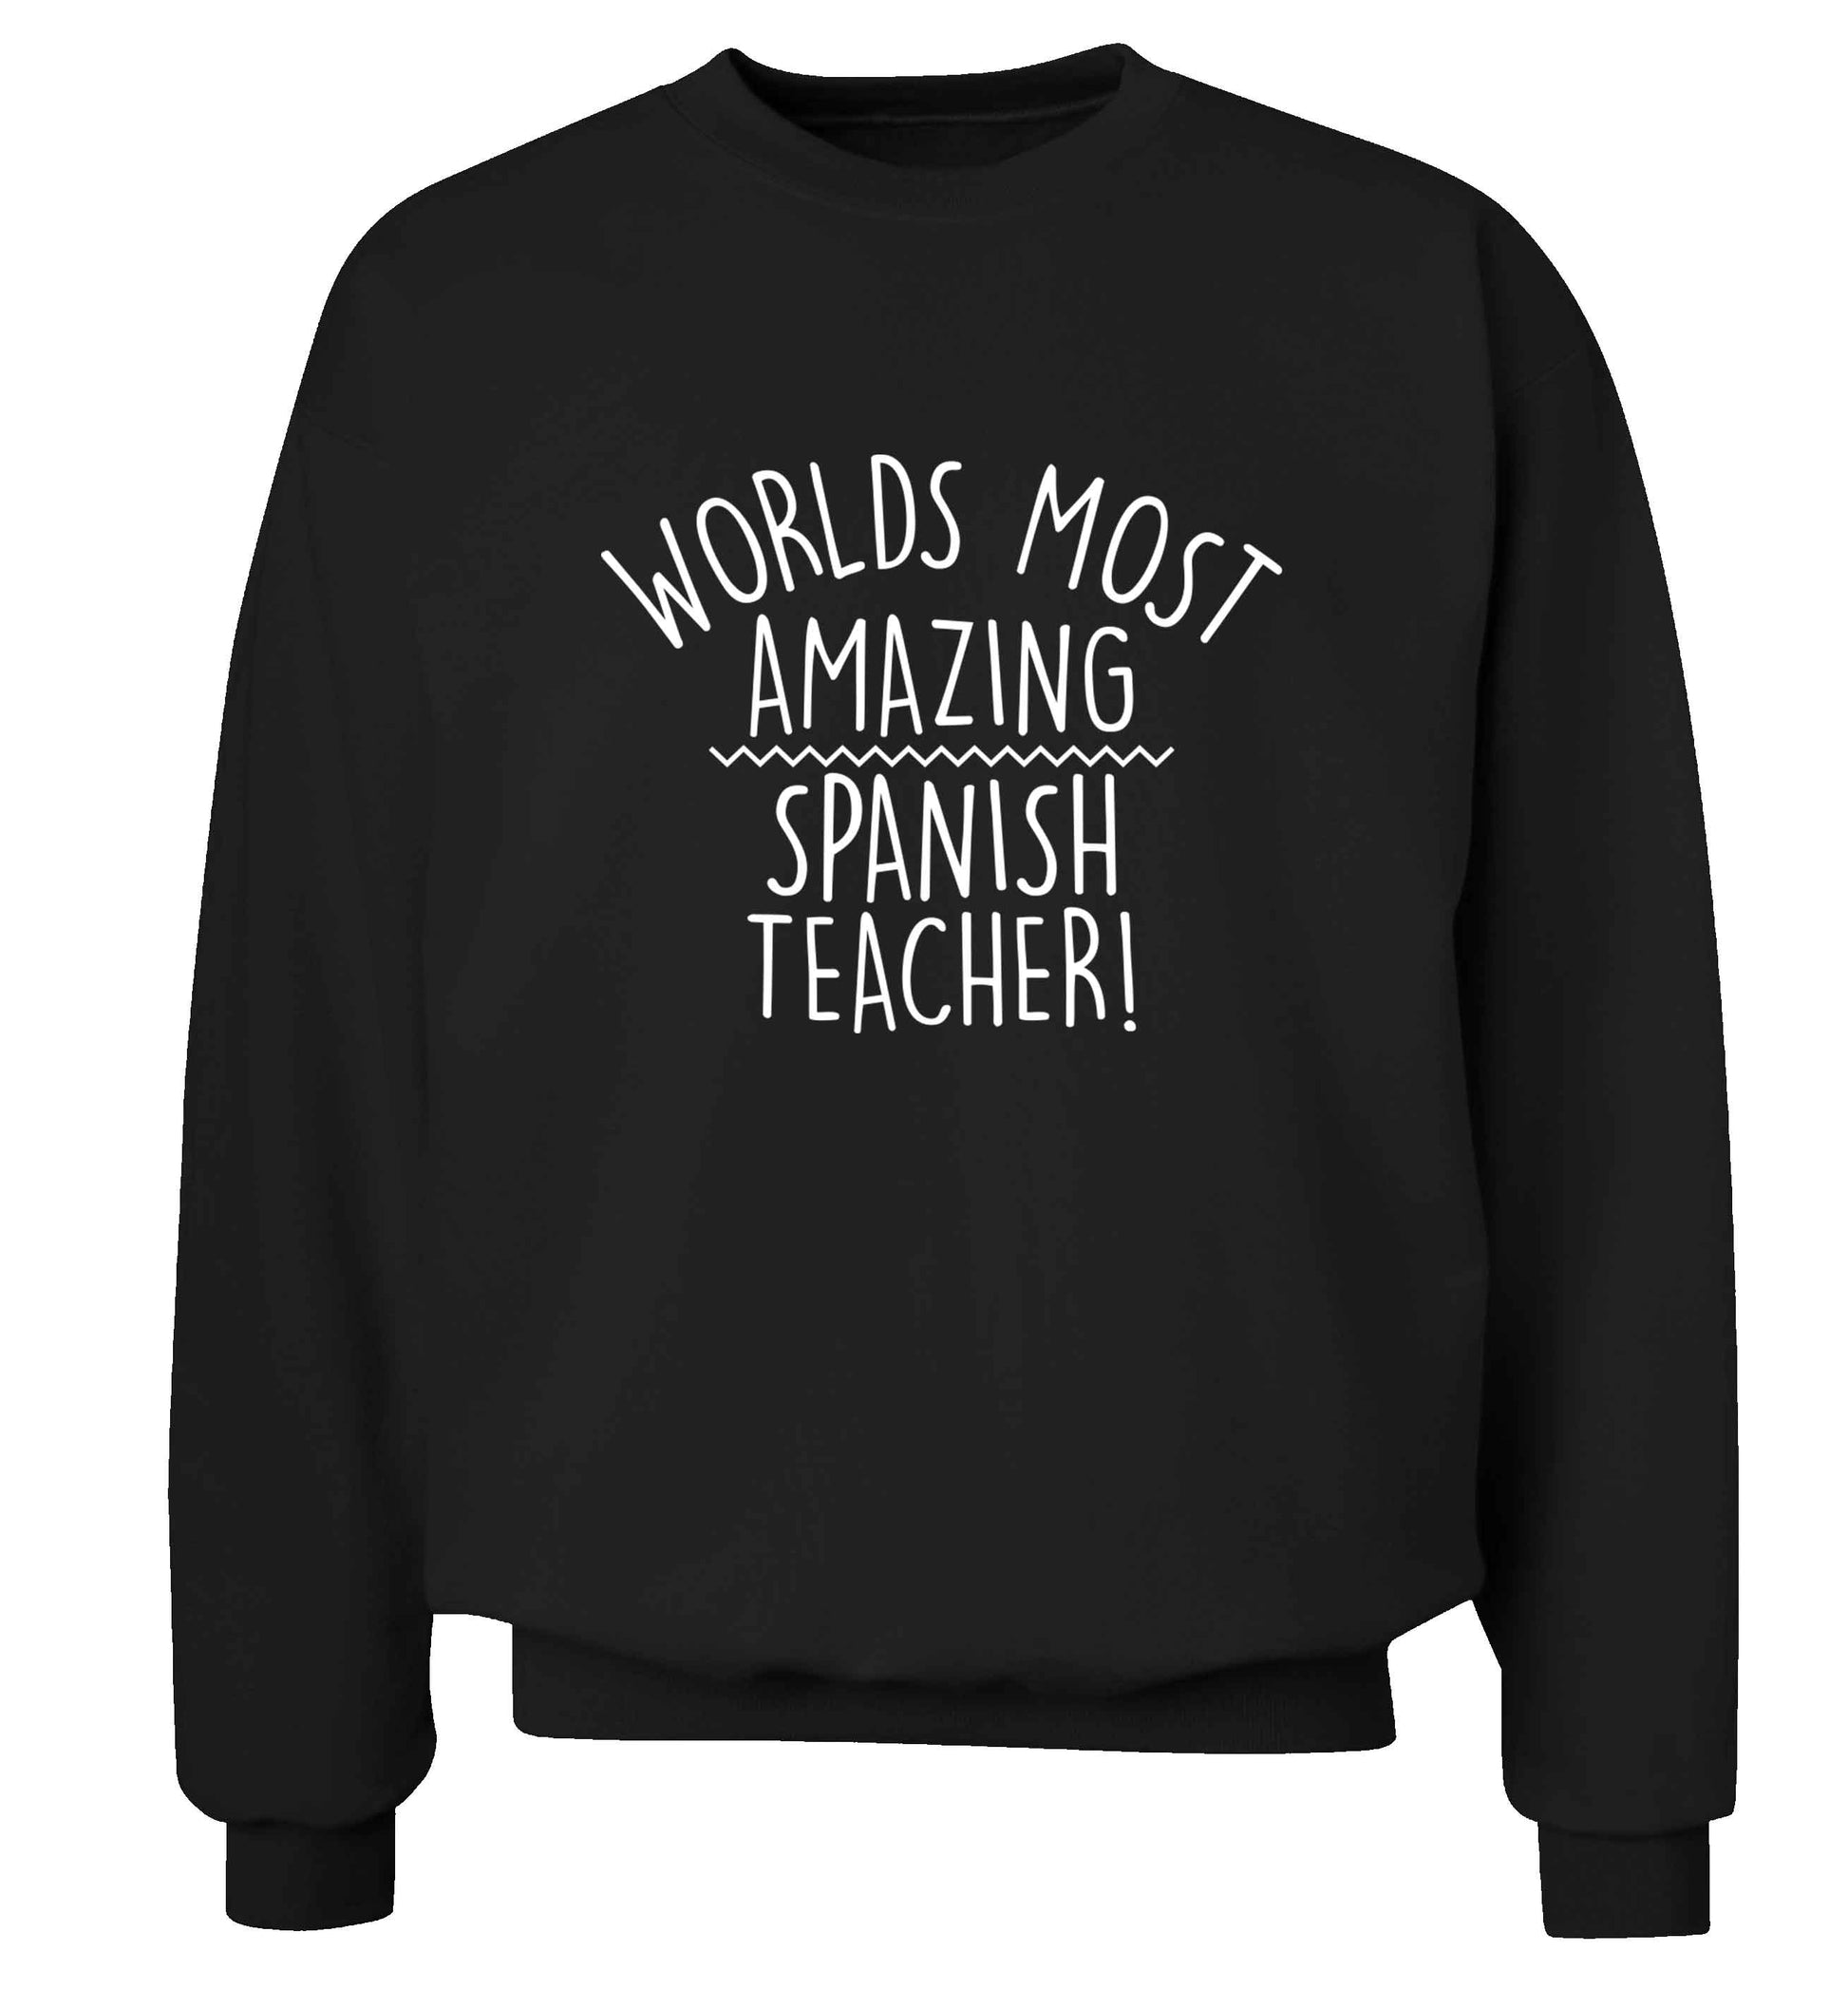 Worlds most amazing Spanish teacher adult's unisex black sweater 2XL